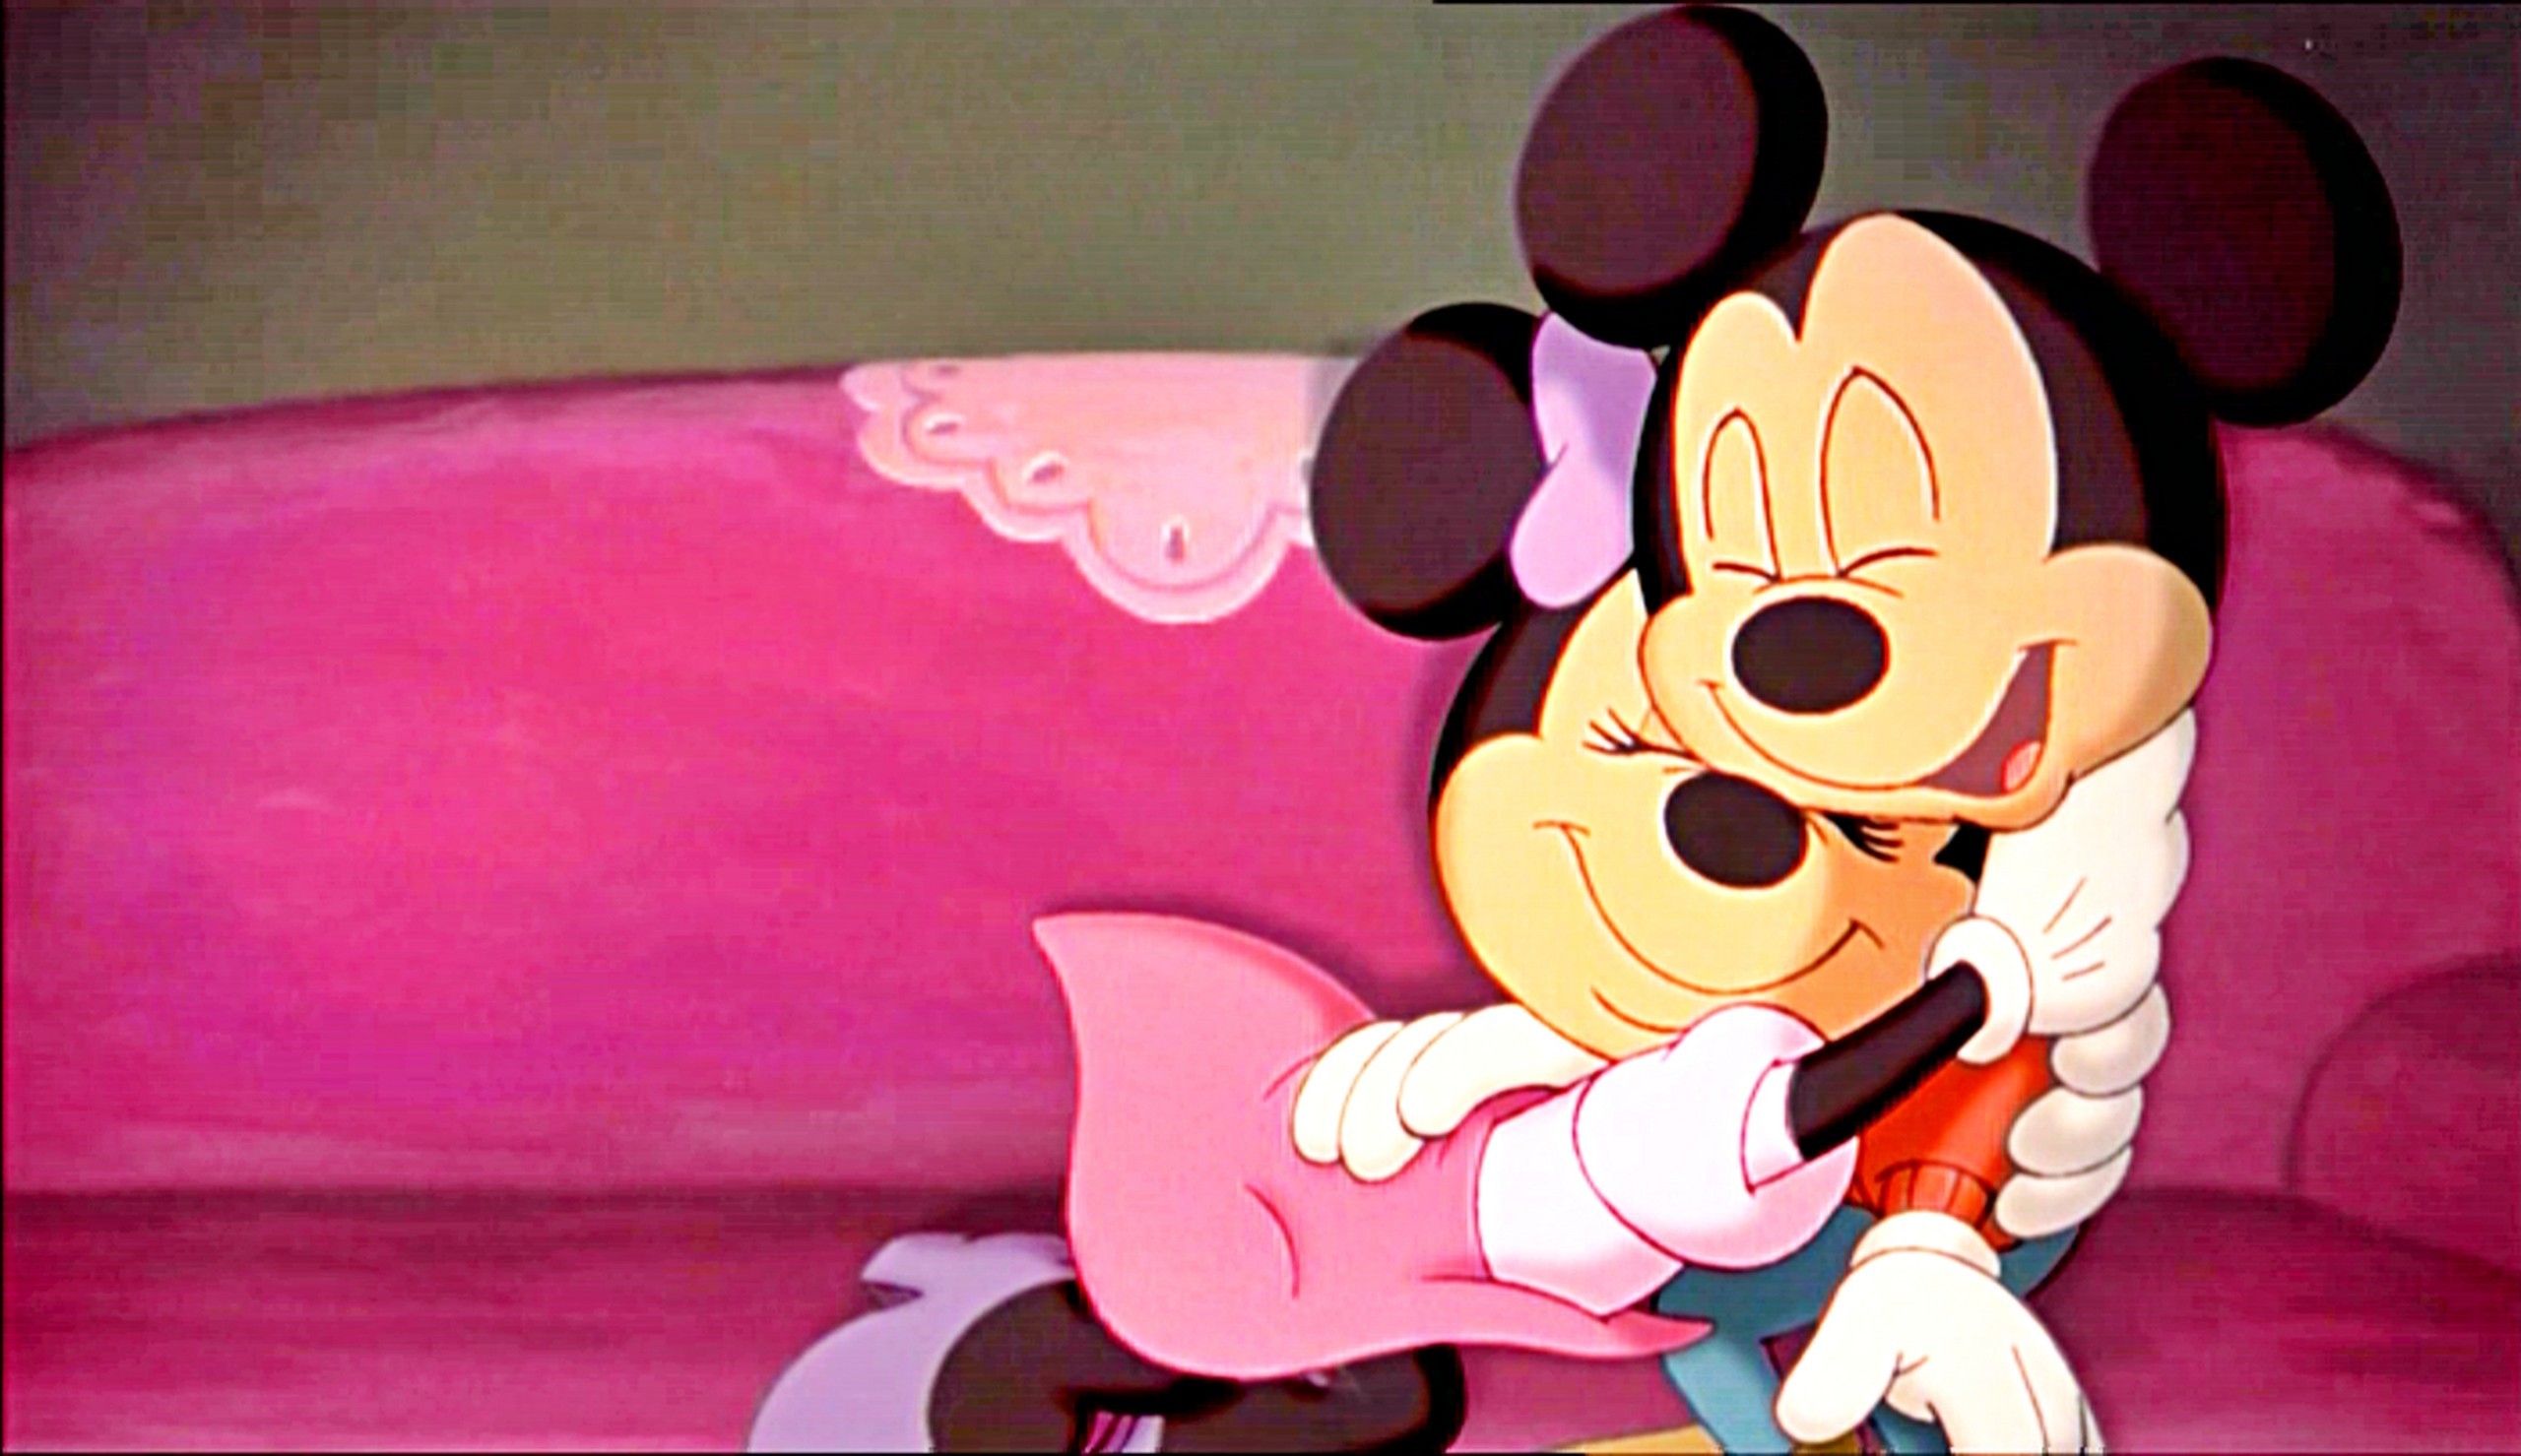 Cute Minnie Mouse Wallpaper Cute Minnie Mouse Wallpaper